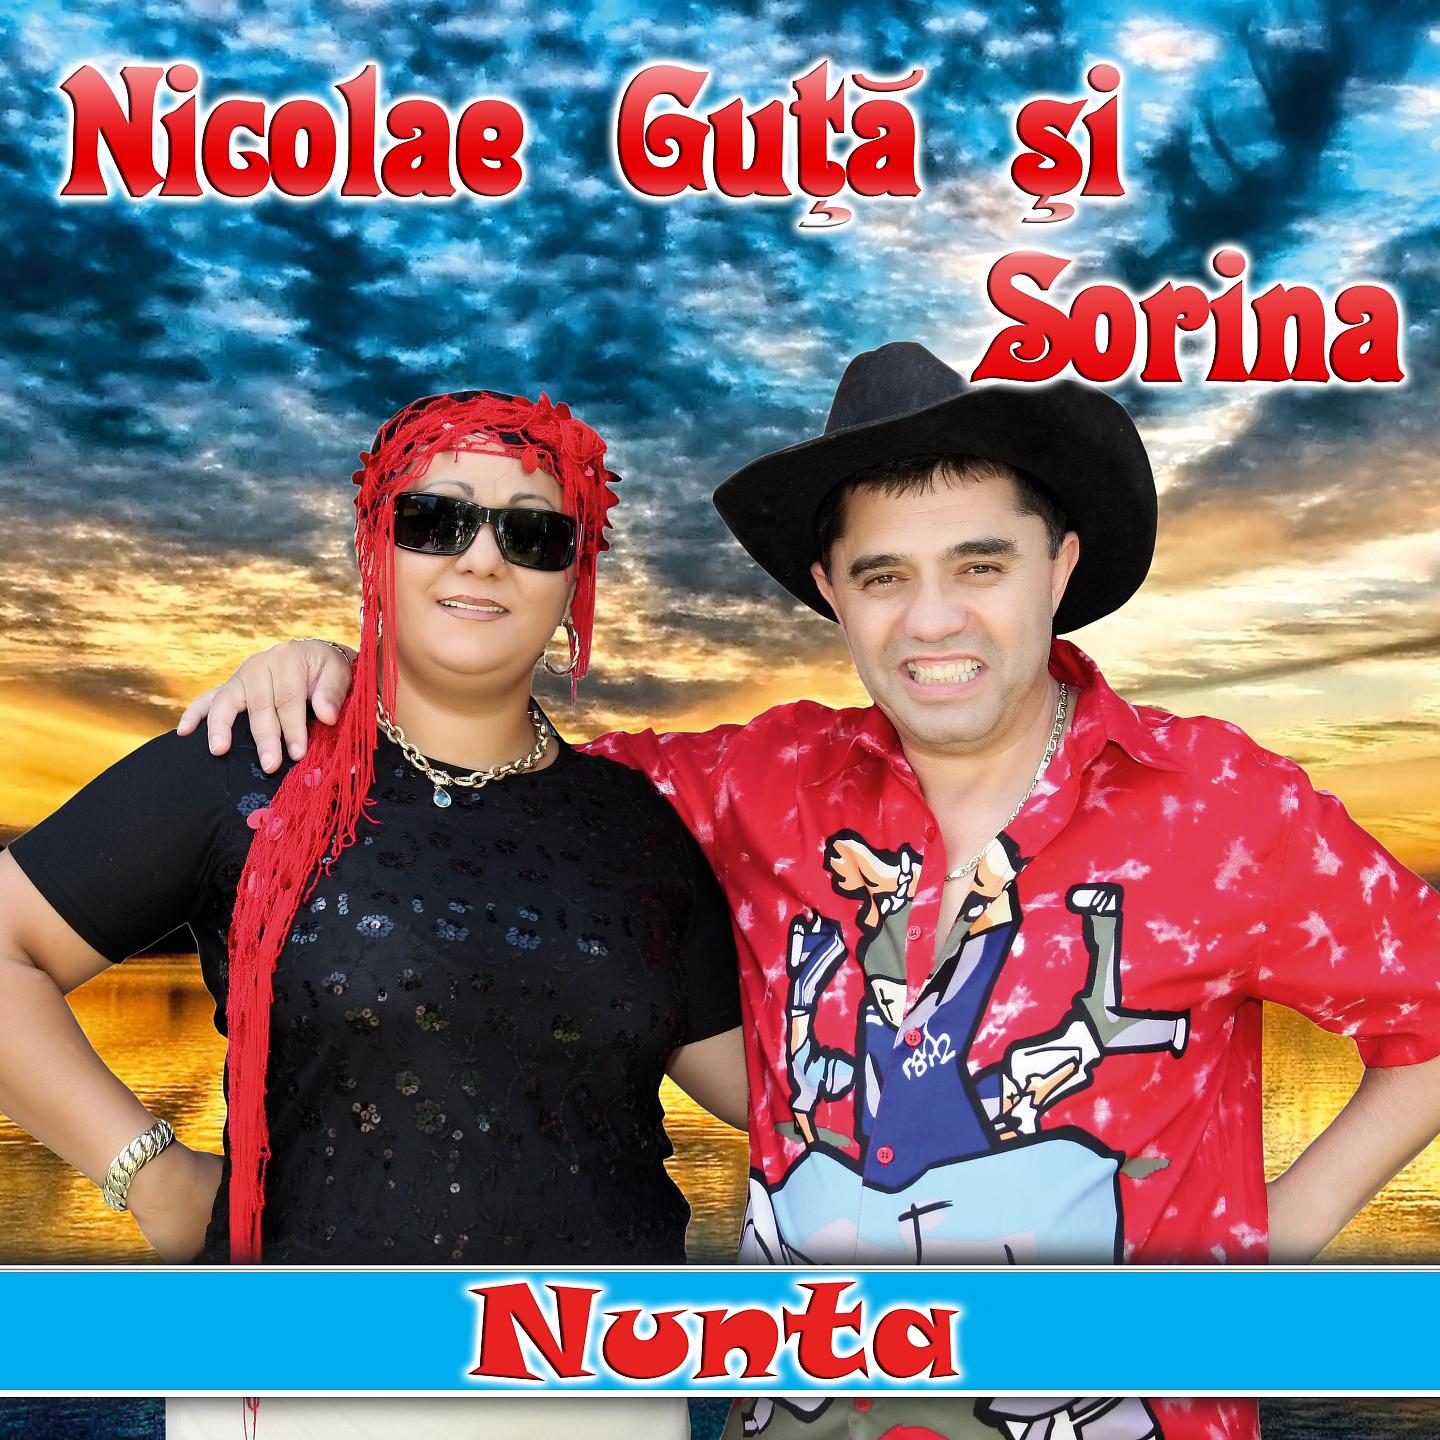 Постер альбома Nunta